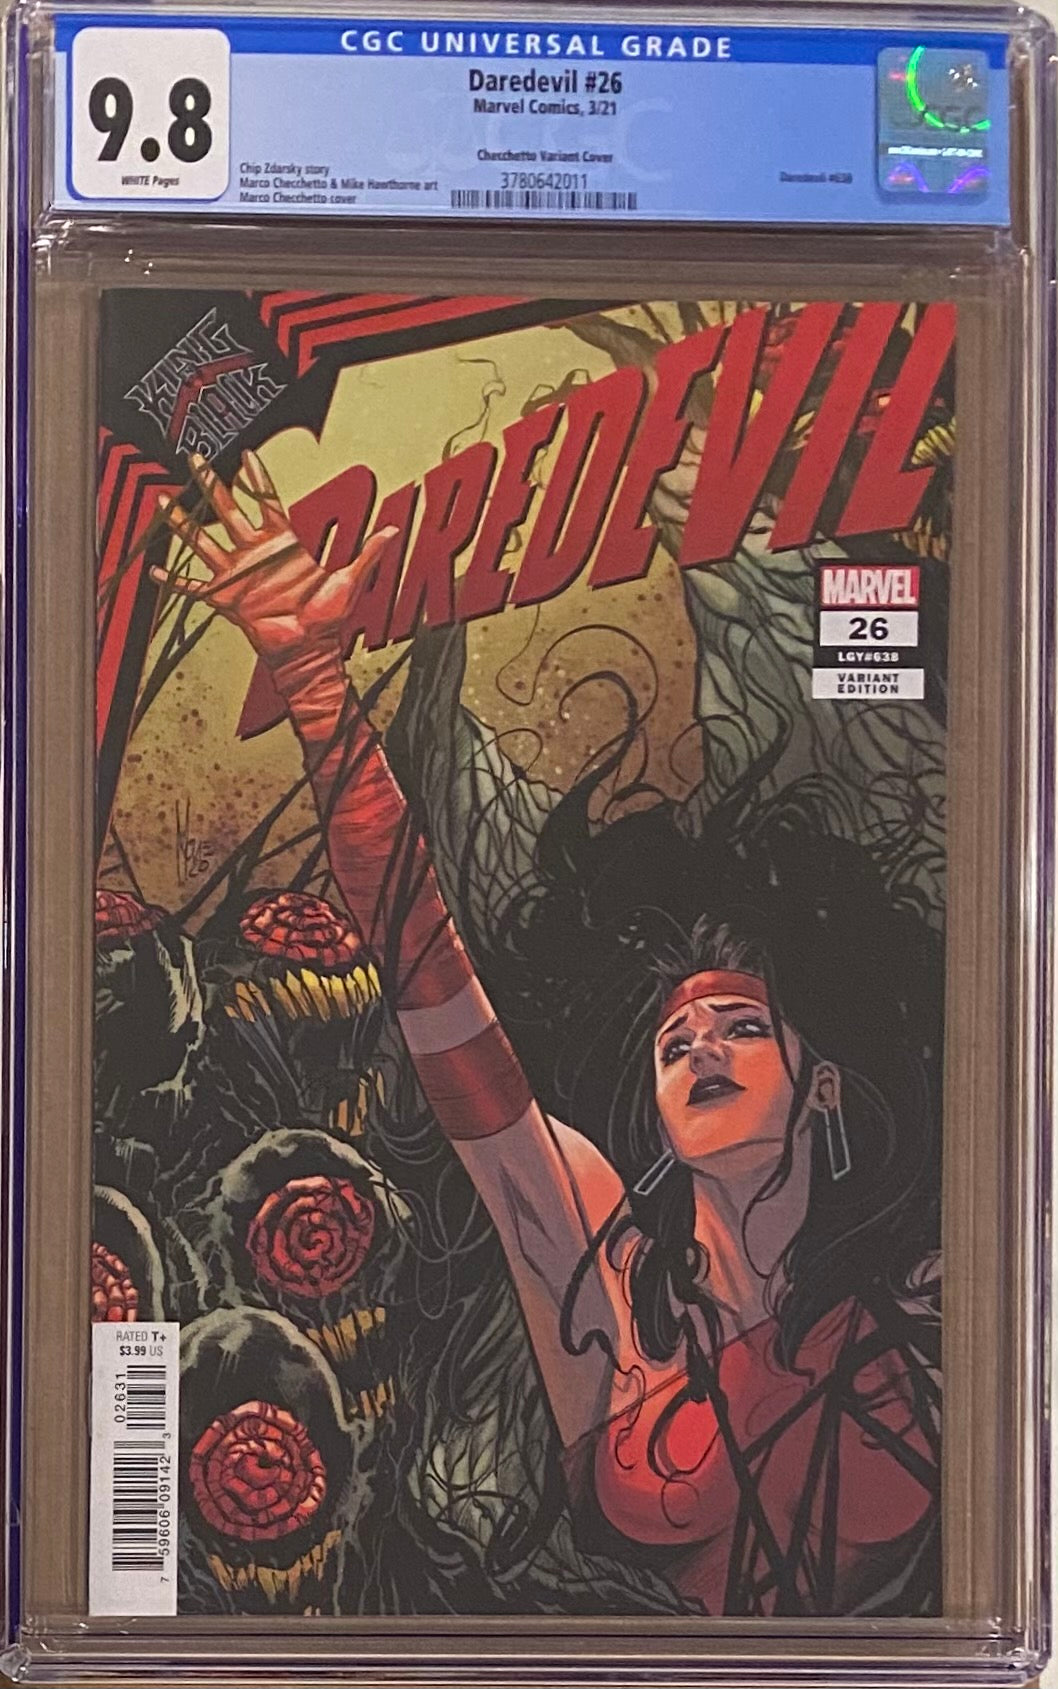 Daredevil #26 Elektra Connecting Cover Variant CGC 9.8